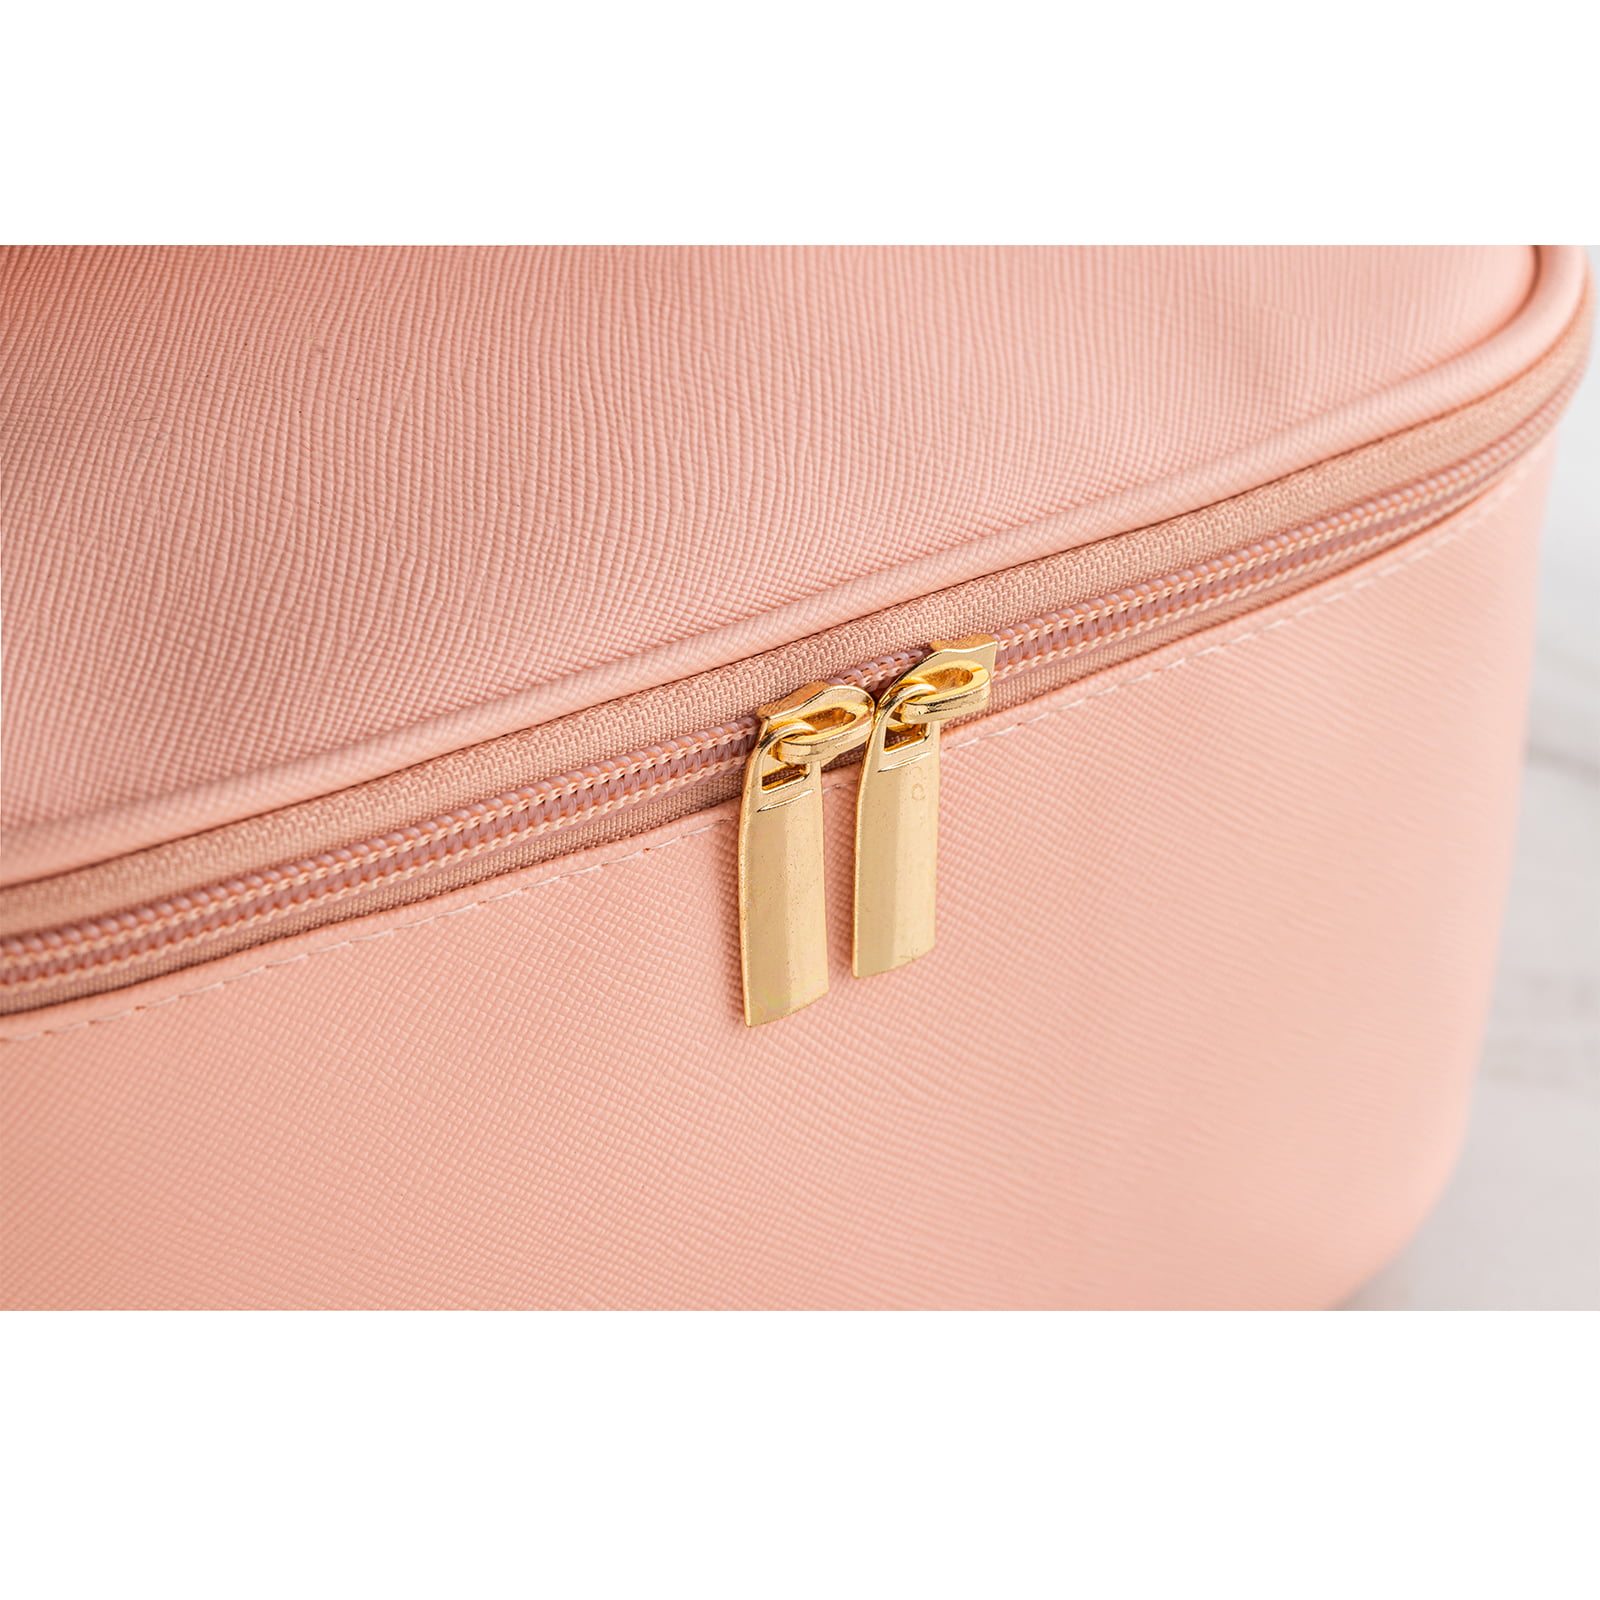 Mini Clear Travel Makeup Organizer Bag for Purse, Small Cute Makeup Bag  Preppy Cosmetic Zipper Pouch Purse, Transparent PVC & Nylon Travel Coin  Pouch